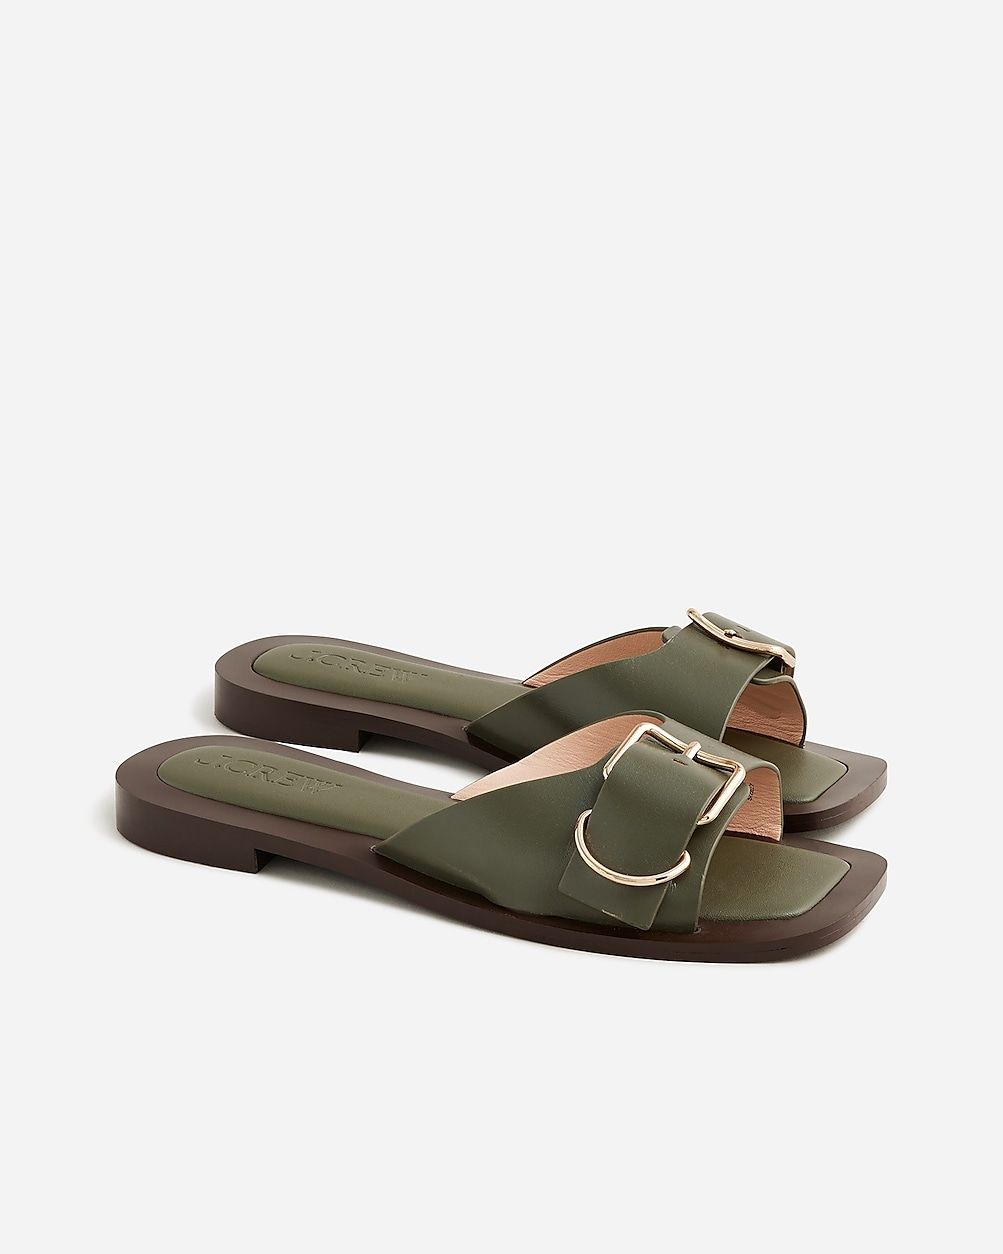 Callie sandals in leather | J.Crew US